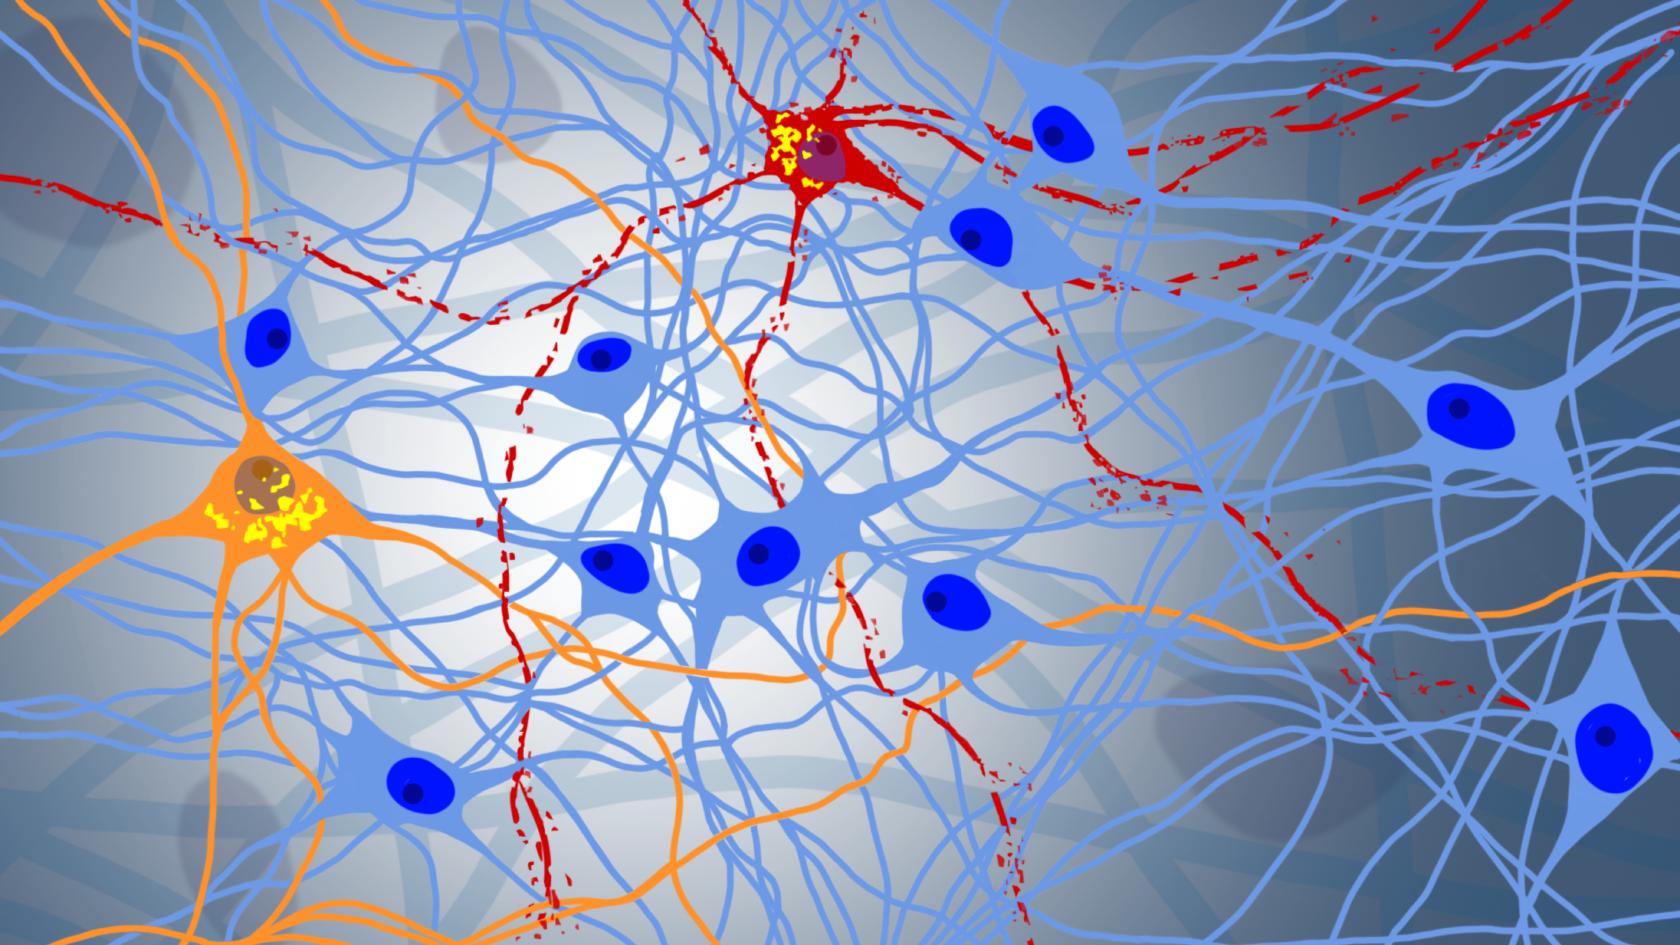 Digital drawing of degenerated neuronal network